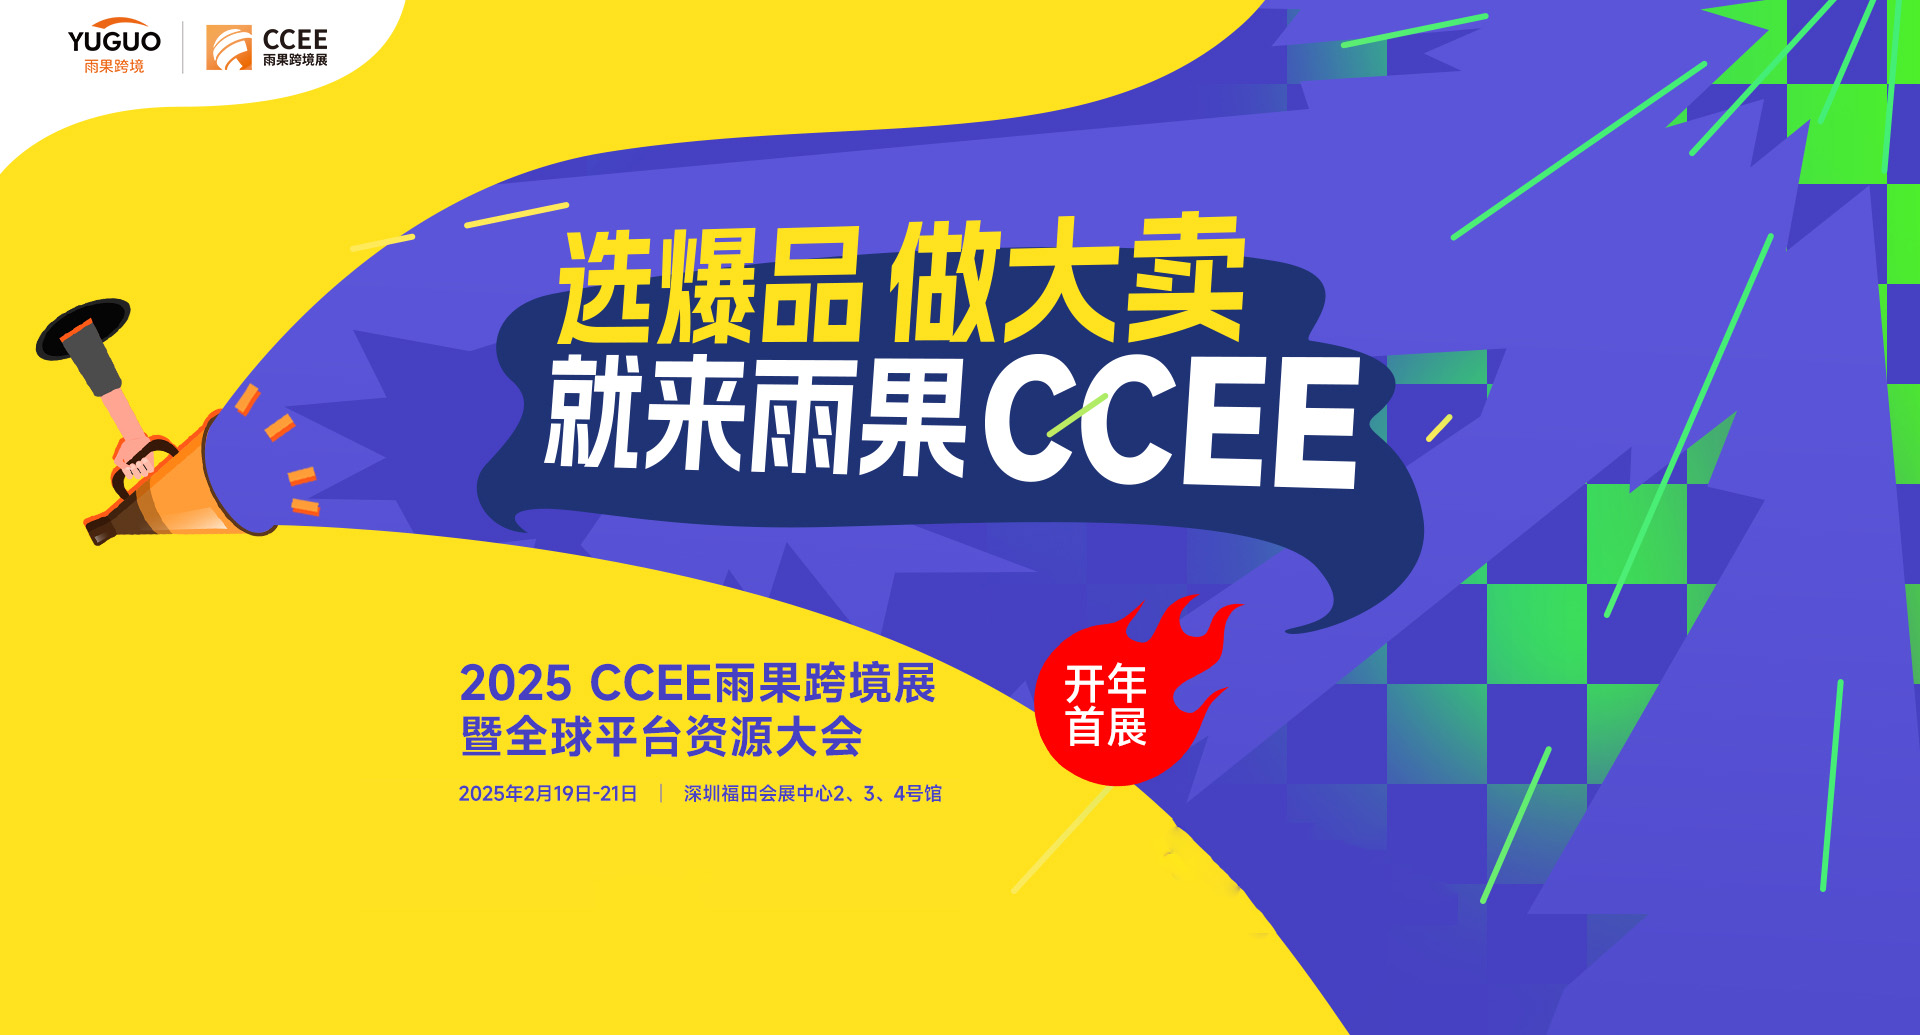  2025CCEE深圳雨果跨境展暨全球平台资源大会